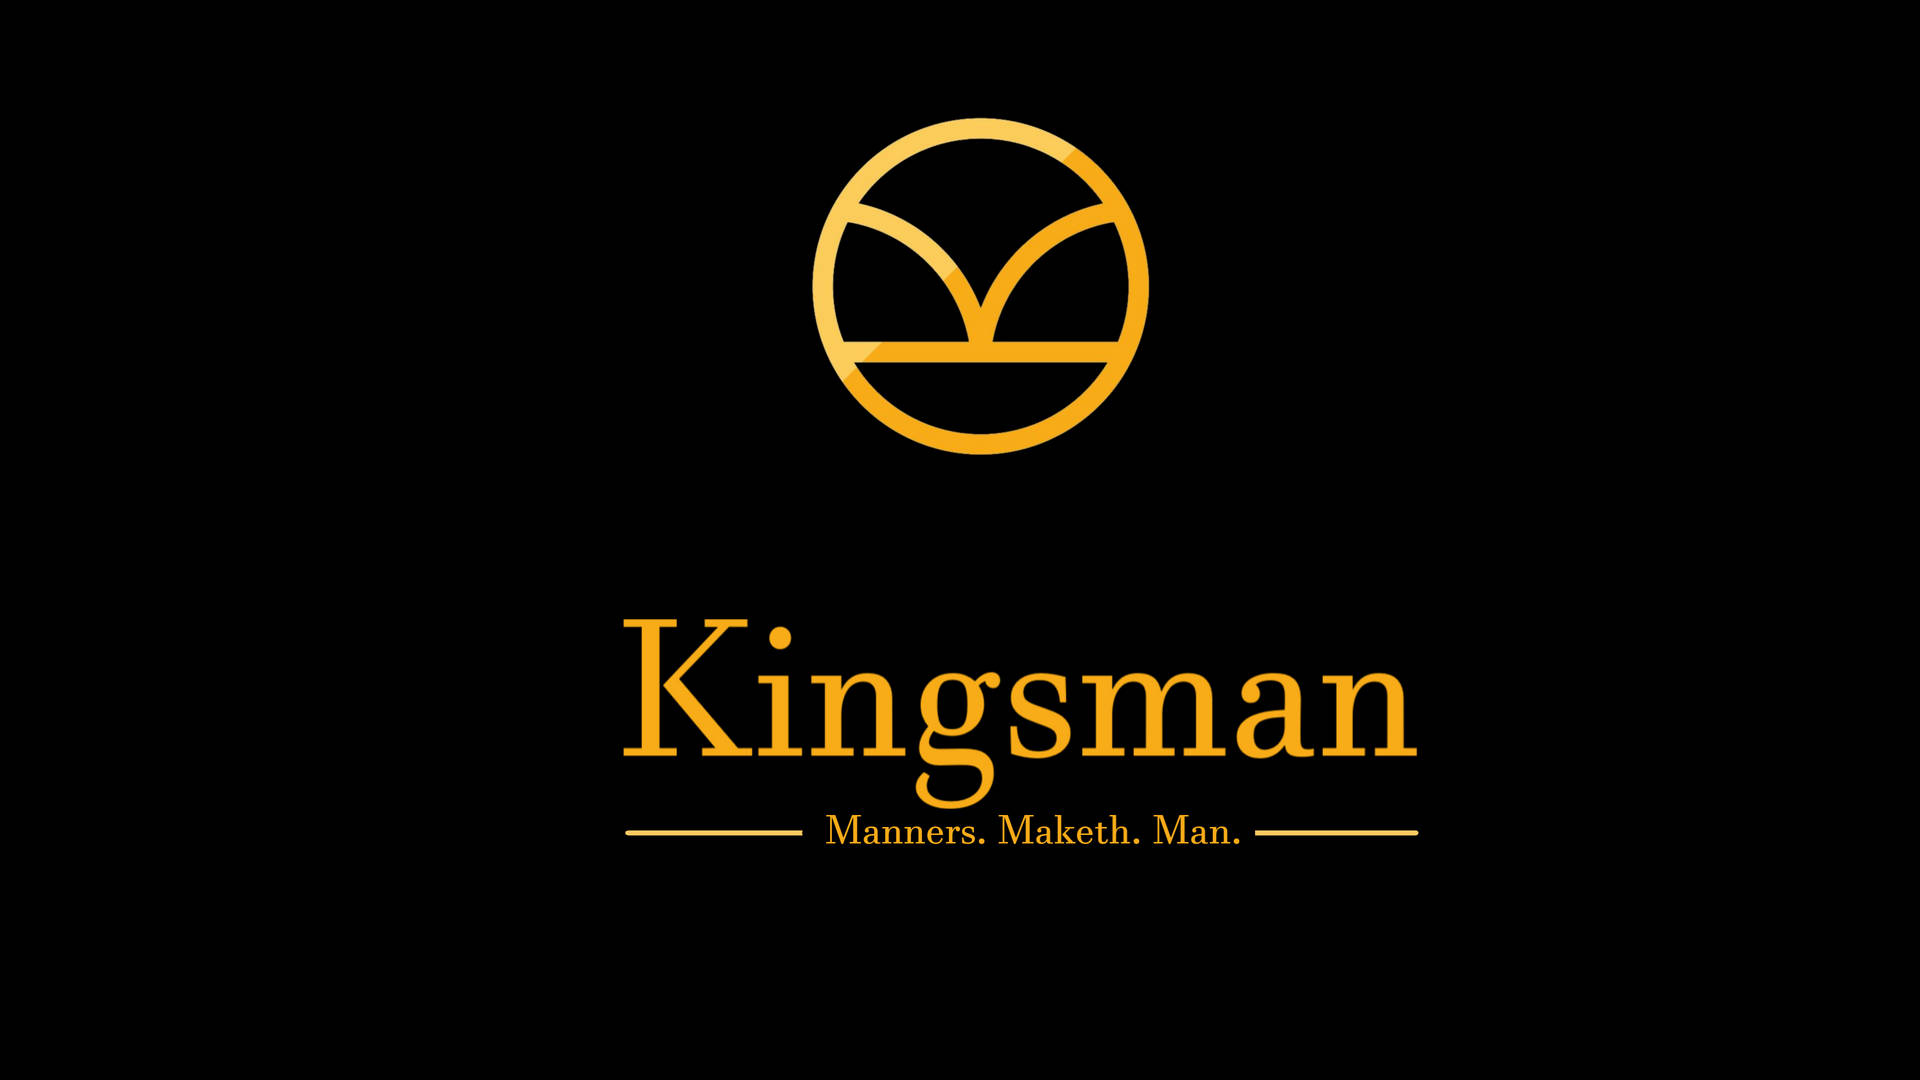 Action-loaded Posture of A Kingsman Agent Wallpaper